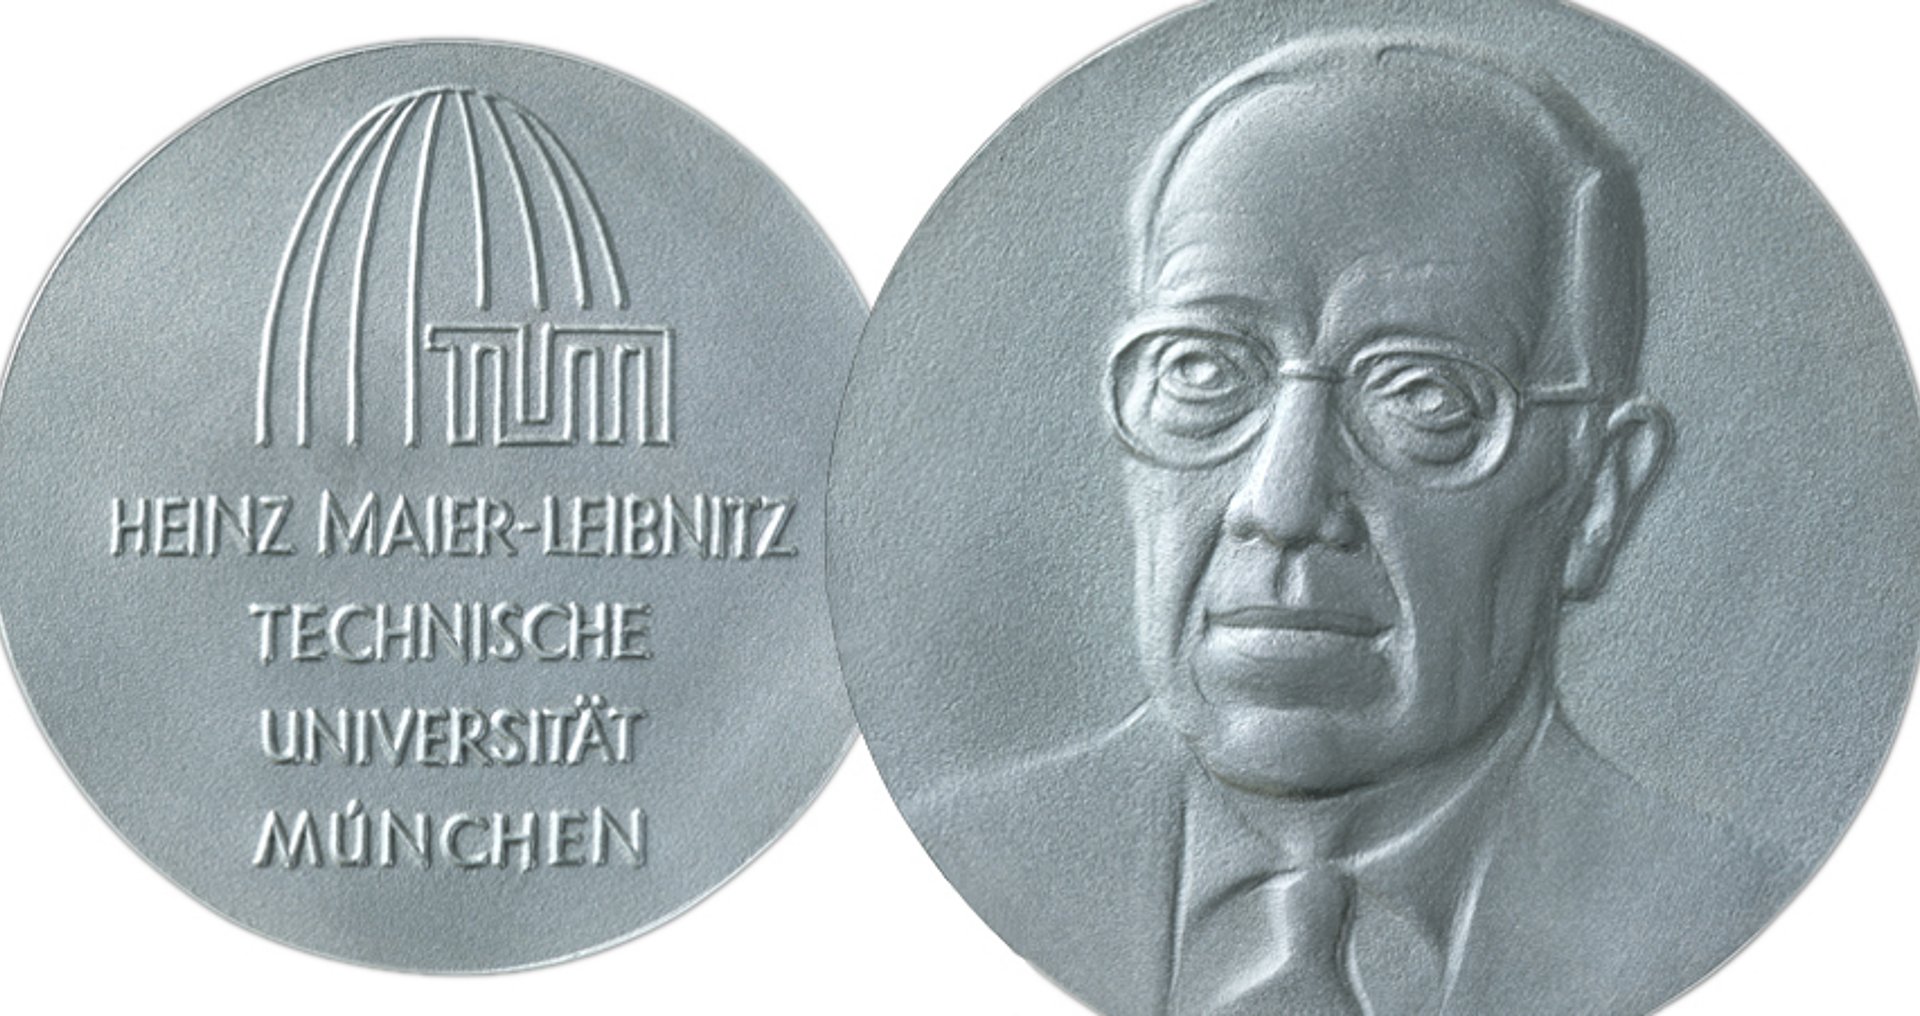 The Heinz Maier-Leibnitz Medal